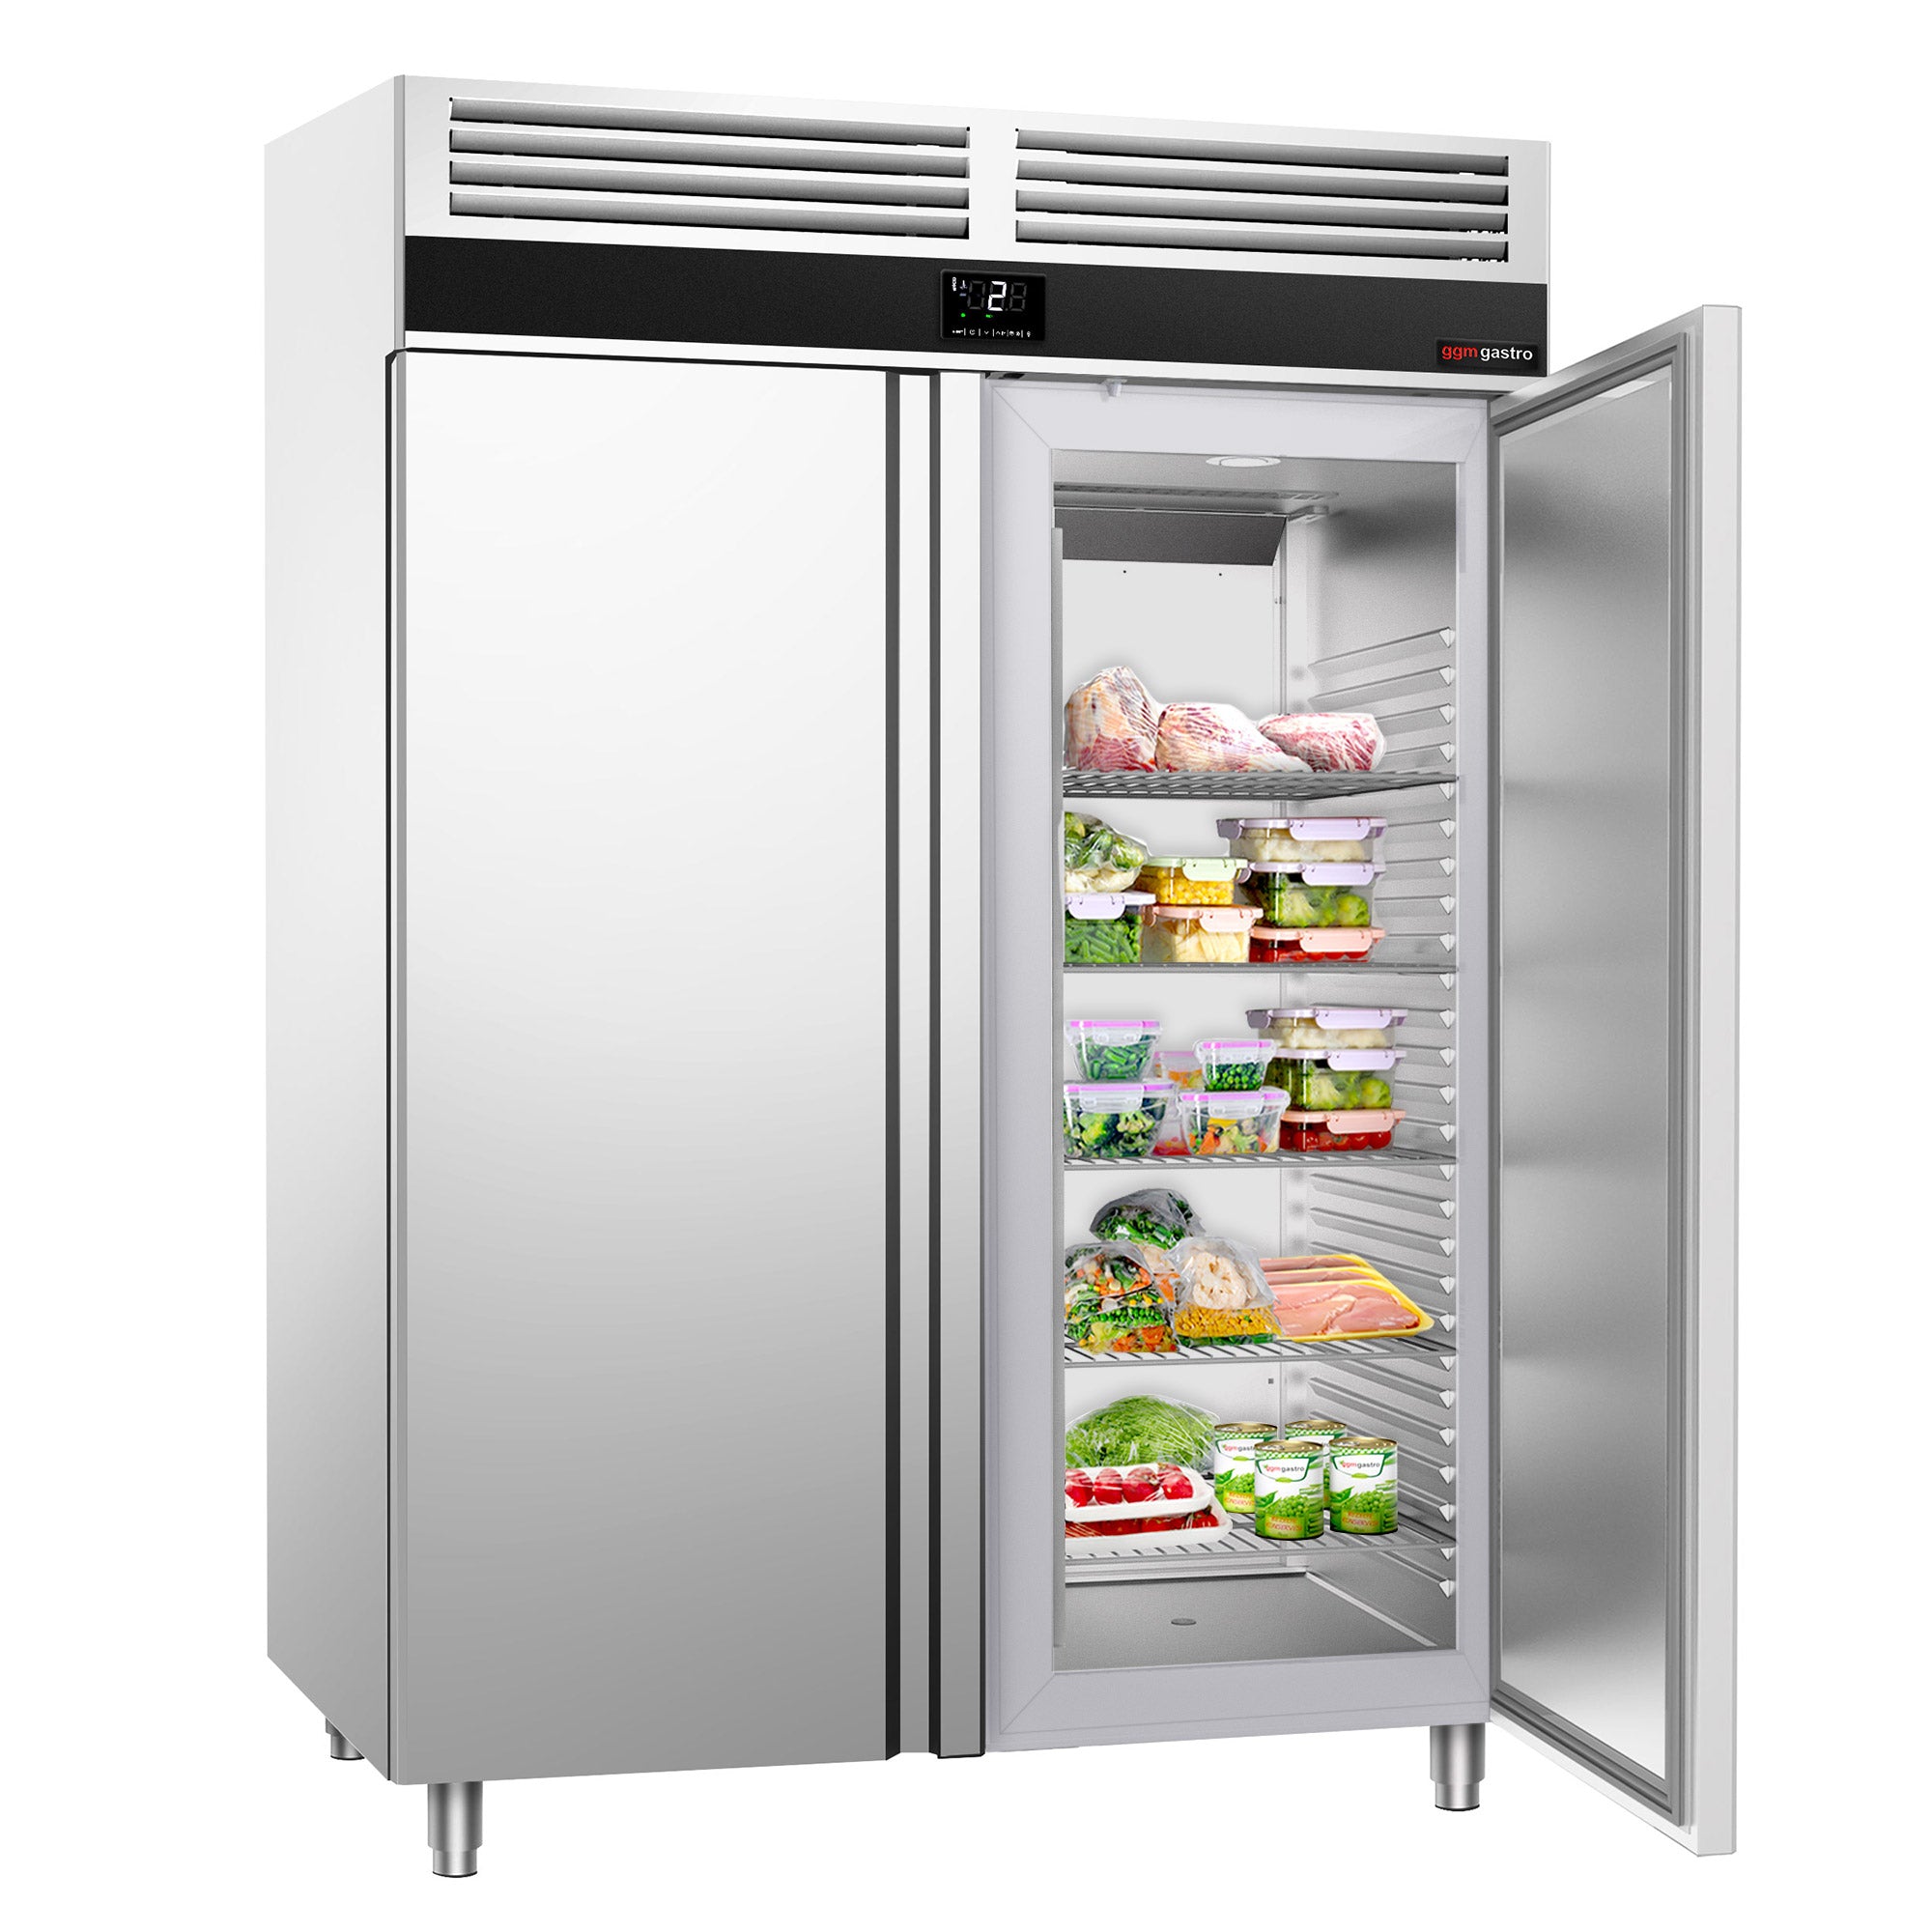 Køleskab - 1,41 x 0,82 m - 1400 liter - med 2 låger i rustfrit stål